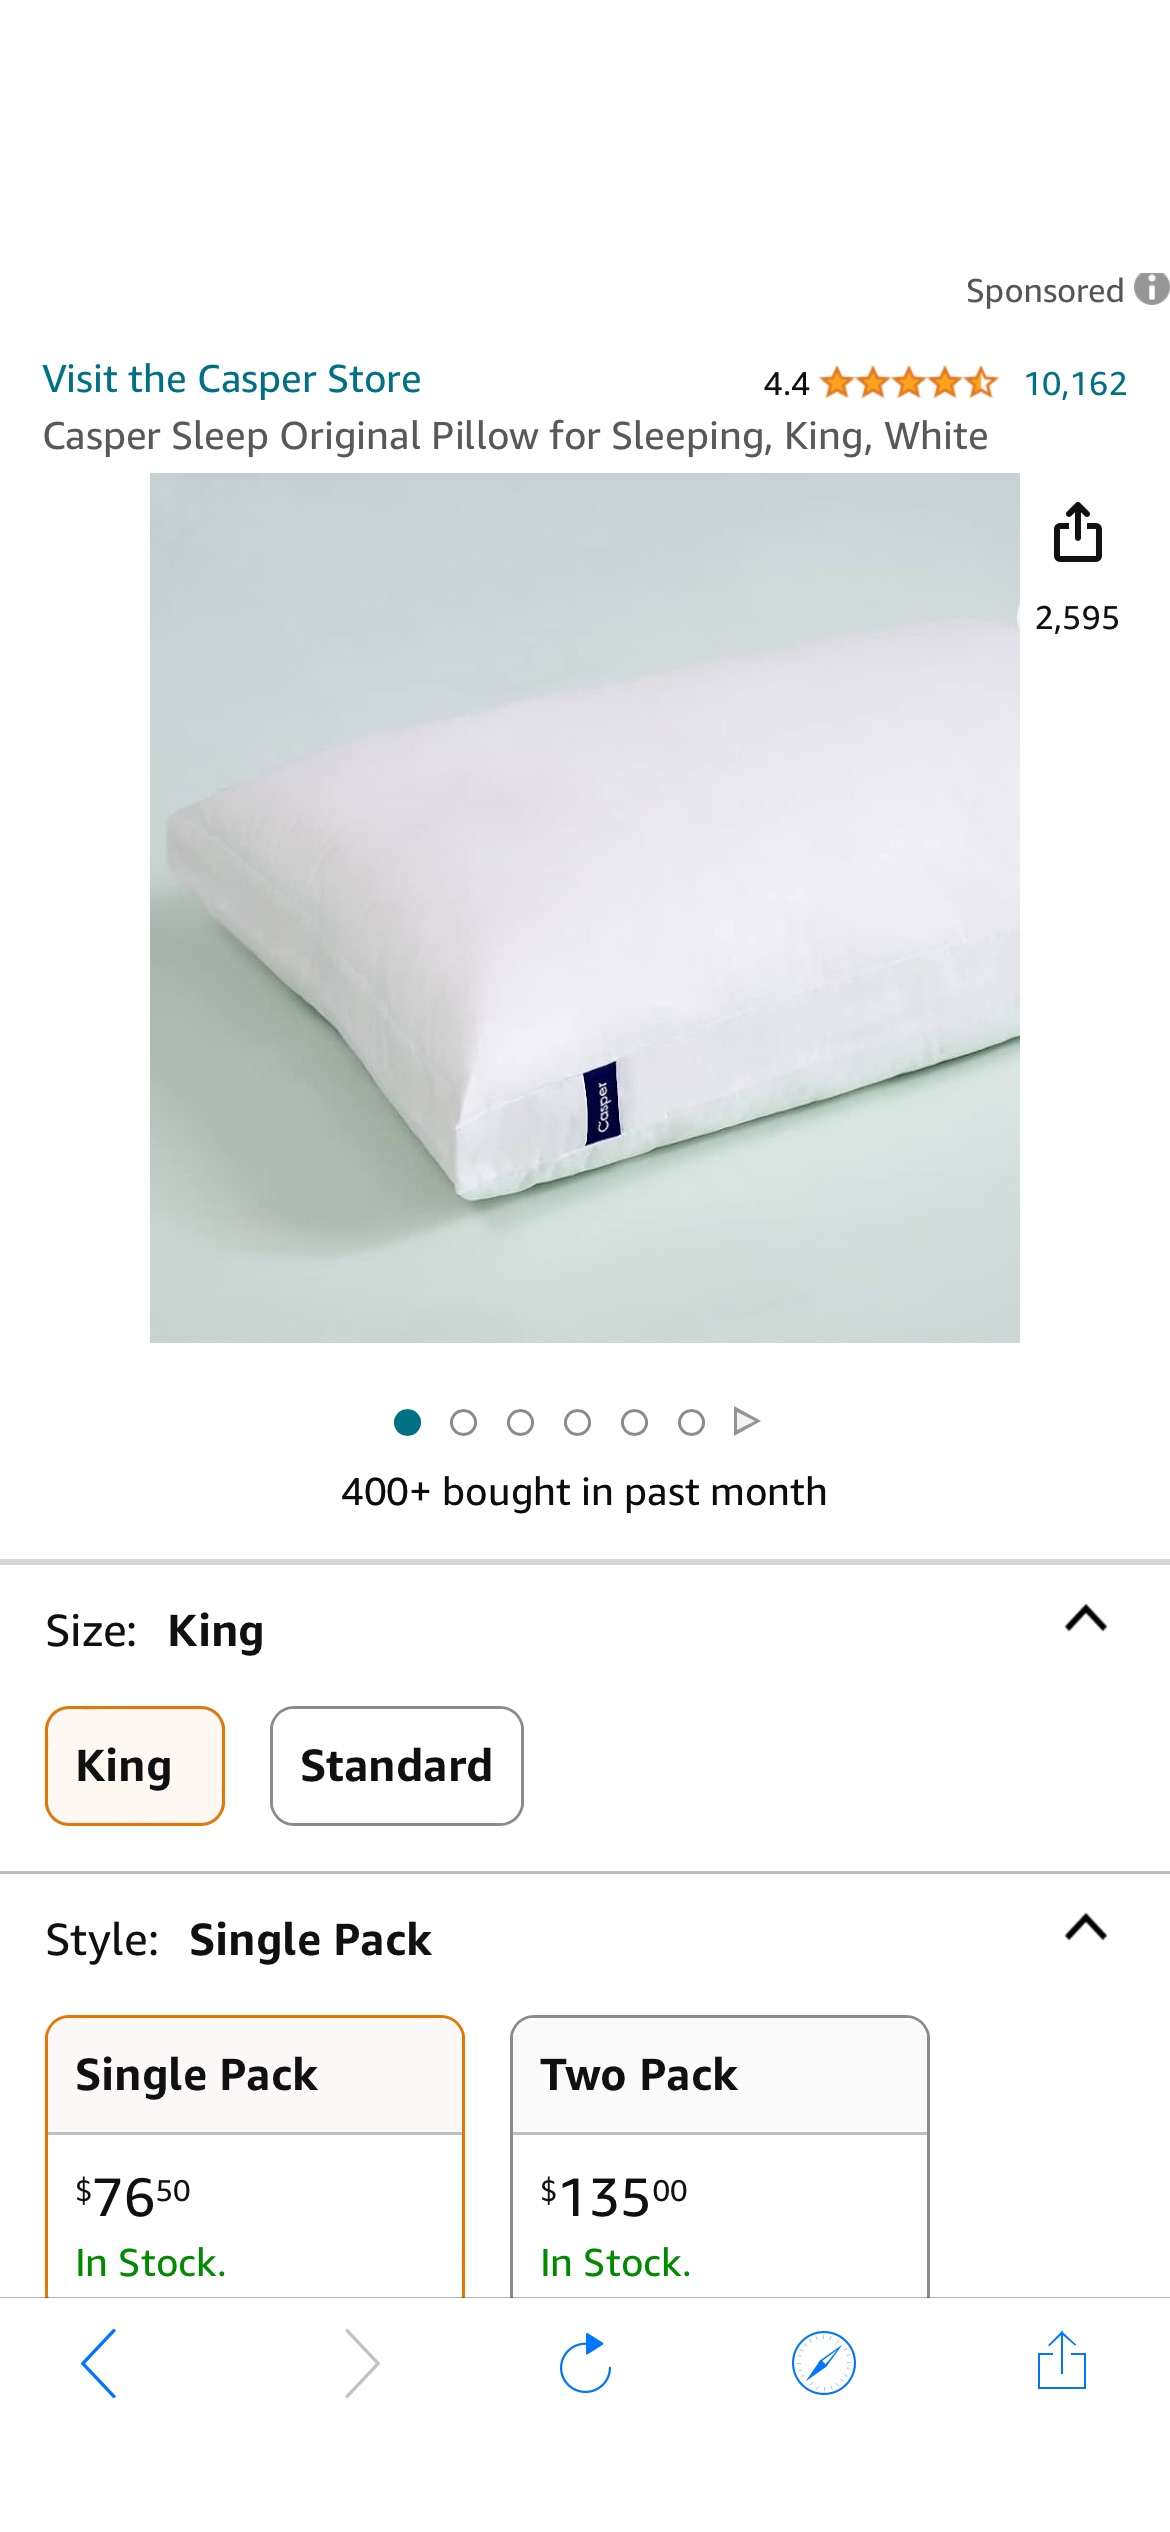 Amazon.com: Casper Sleep Original Pillow for Sleeping, King, White : Home & Kitchen